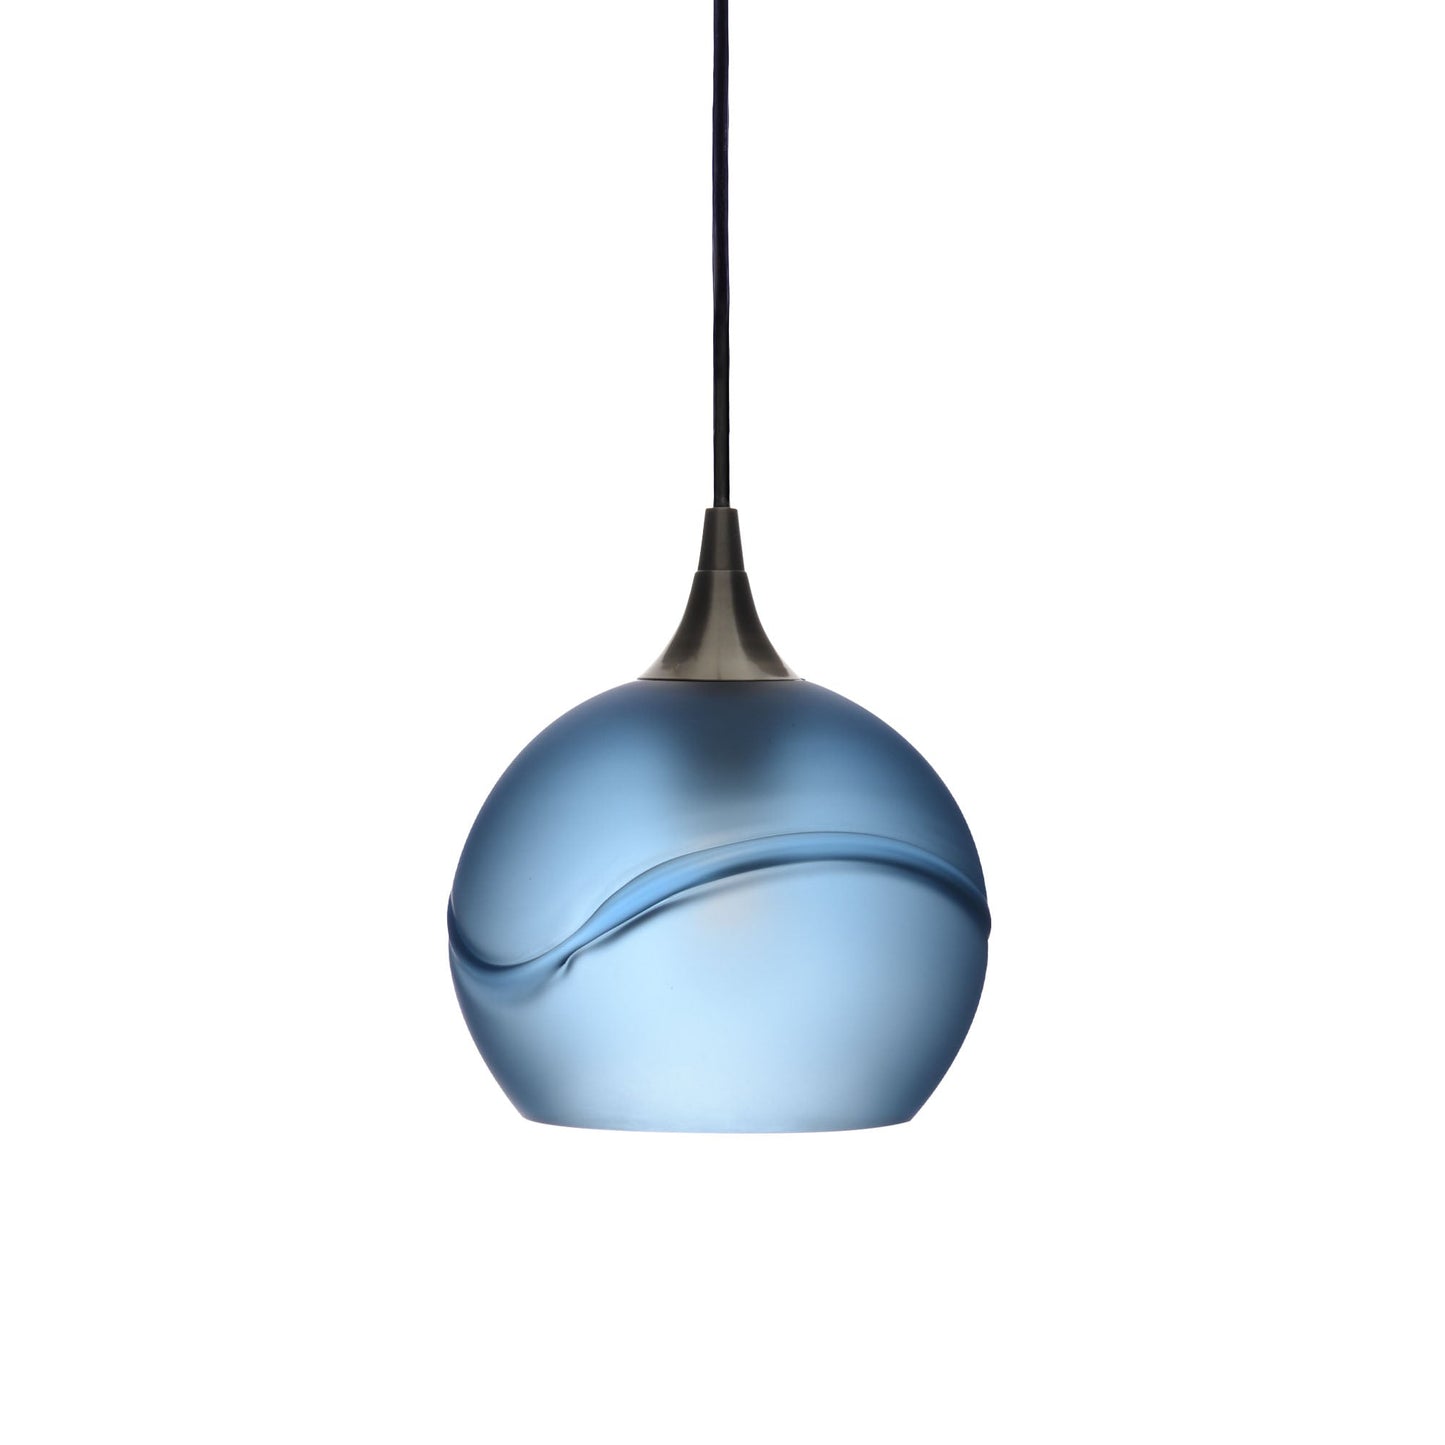 767 Glacial: Single Pendant Light-Pendant Lighting-Bicycle Glass Co - Hotshop-Steel Blue-Antique Bronze-Bicycle Glass Co